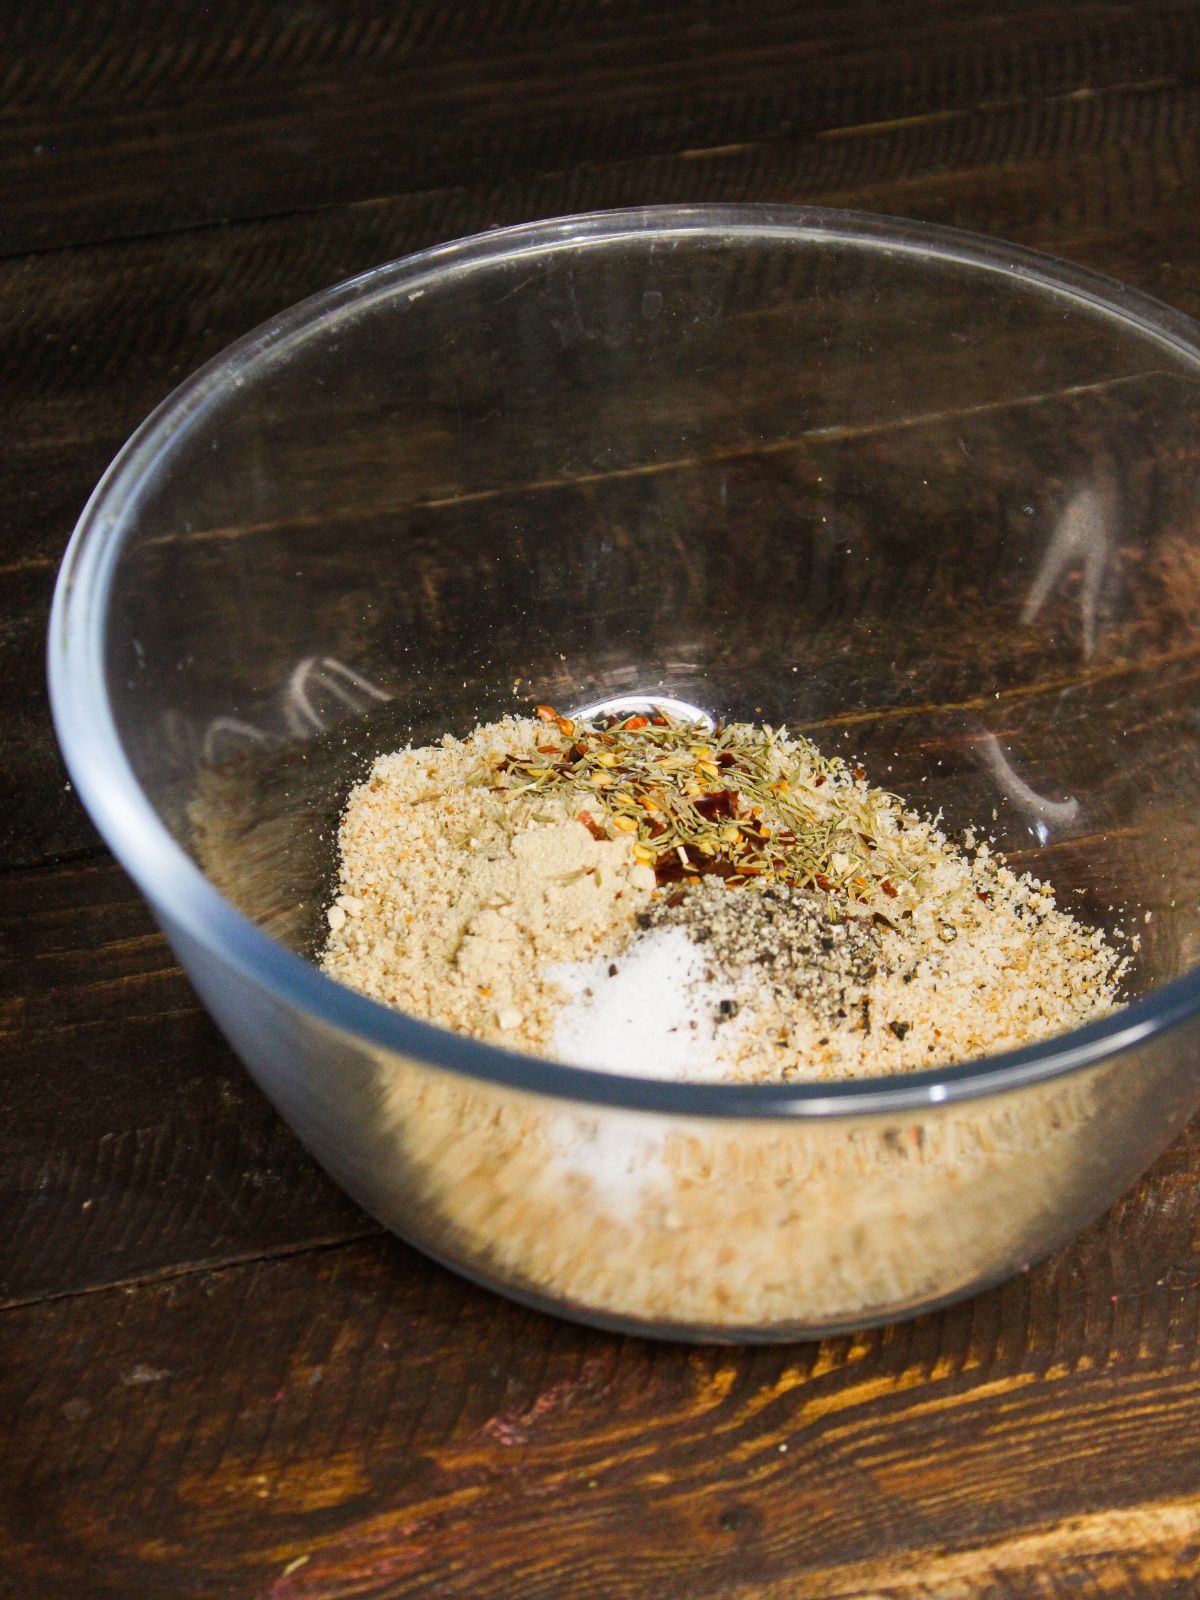 Add breadcrumbs, garlic powder, salt, black pepper powder, mixed herbs in a bowl